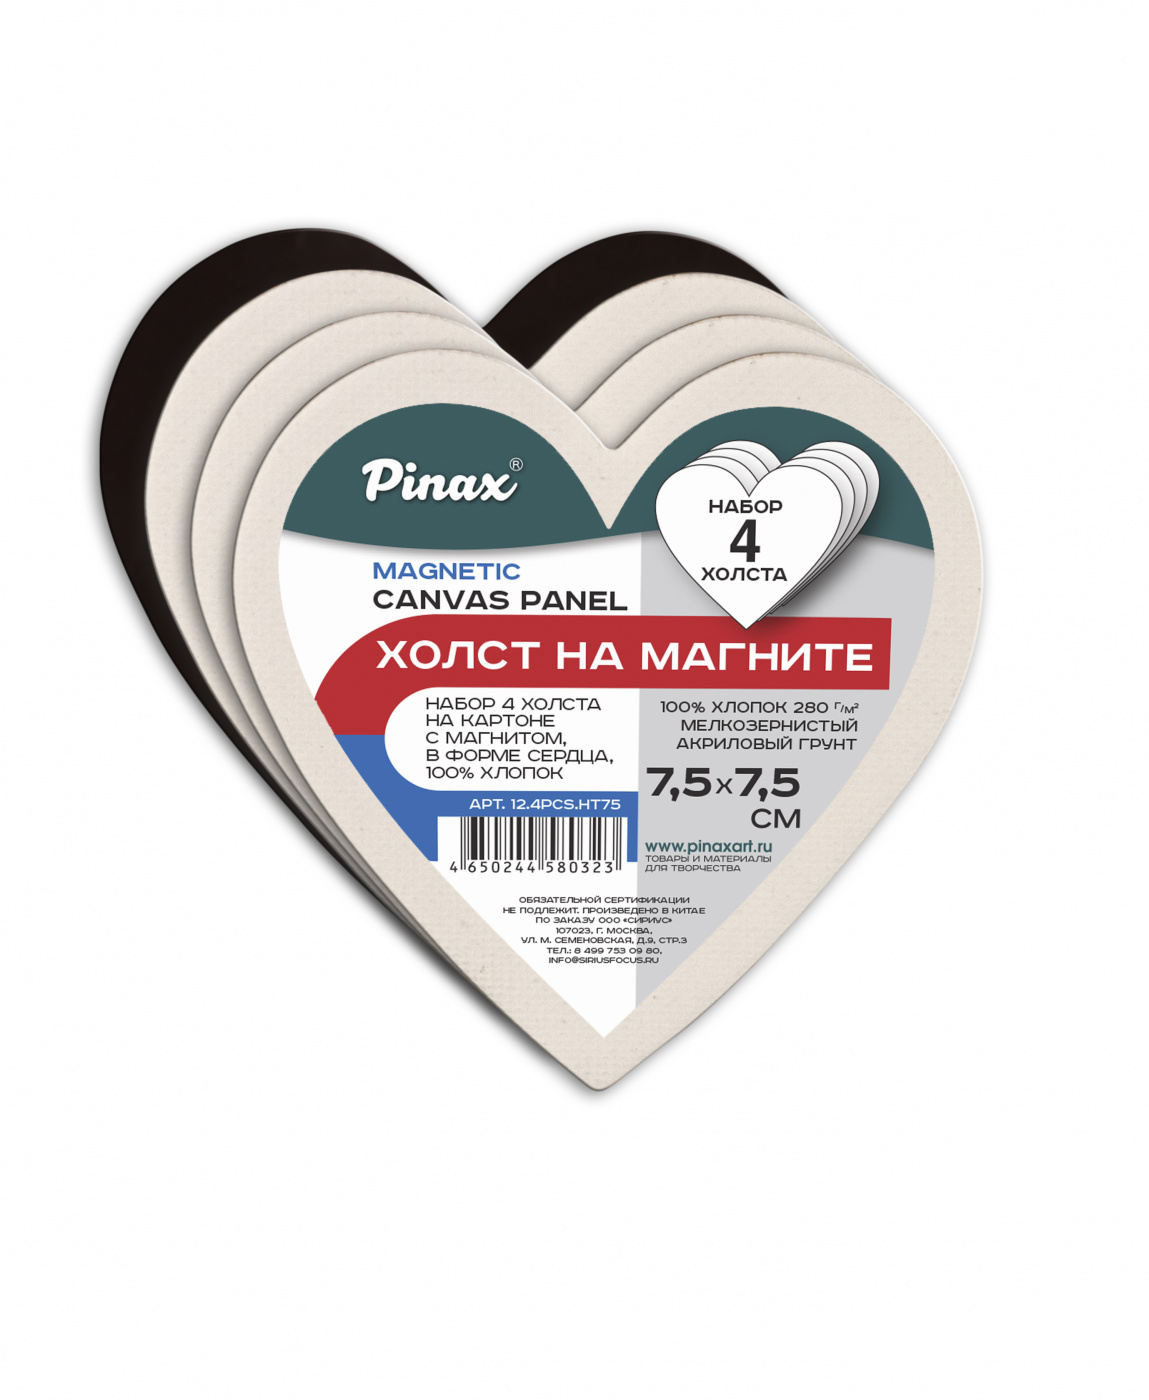 Набор холстов на картоне с магнитом Pinax 4 шт, хлопок 100%, в форме сердца 7,5 см набор холстов на картоне малевичъ в форме сердца 30х26 25 см 2 шт